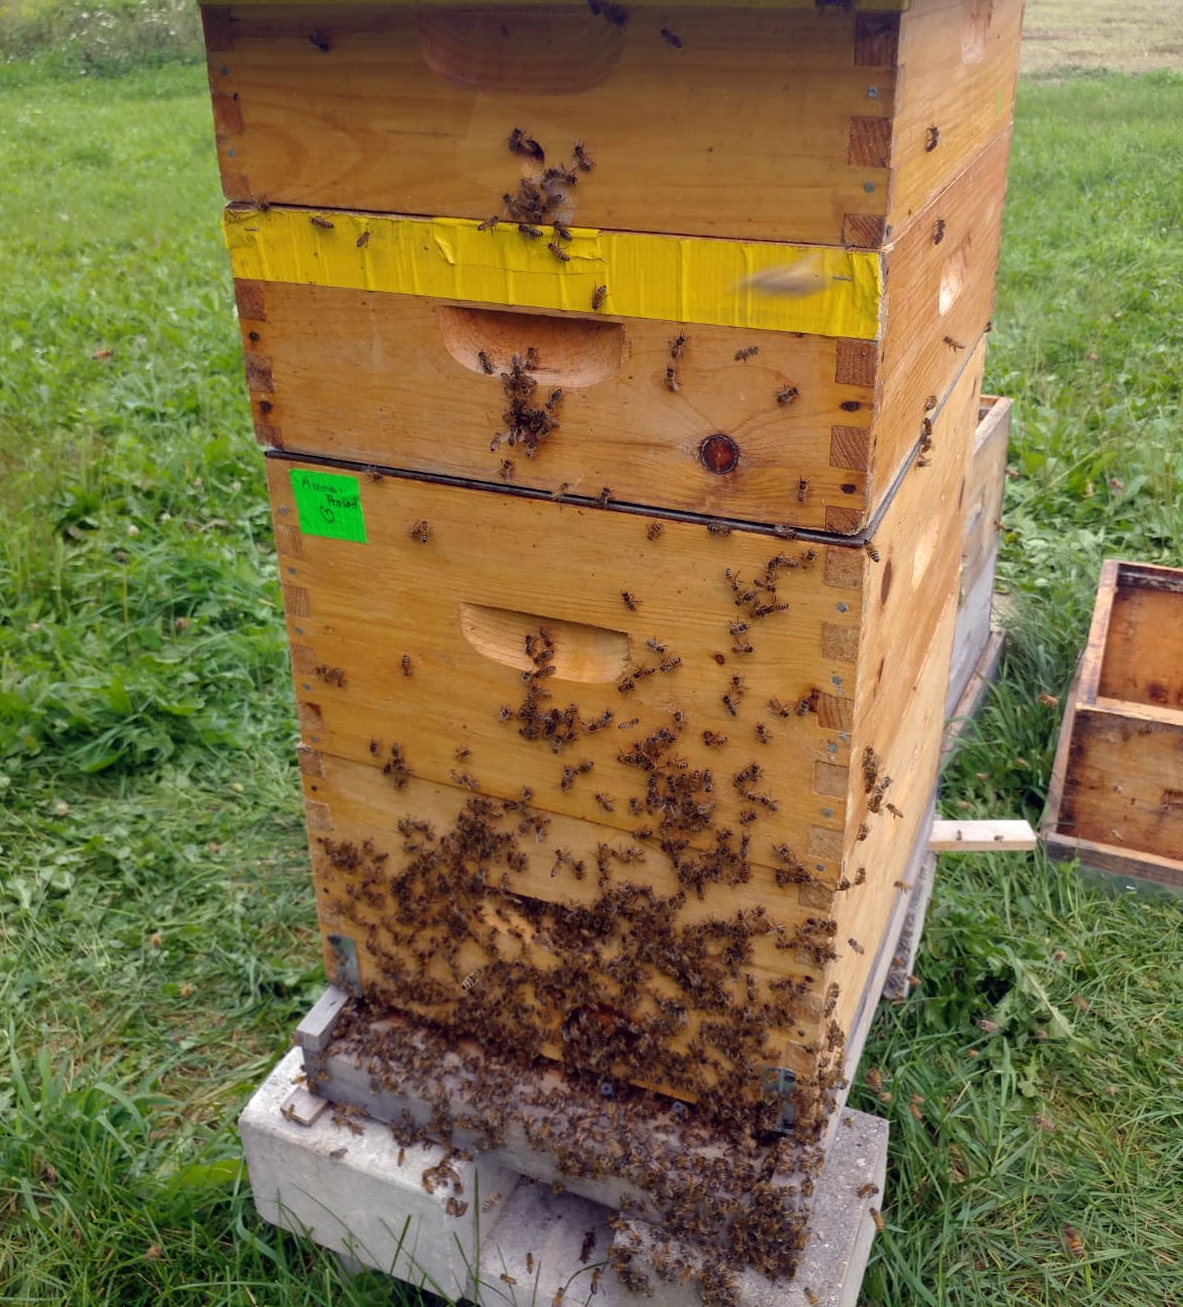 Bees 'bearding' on hives